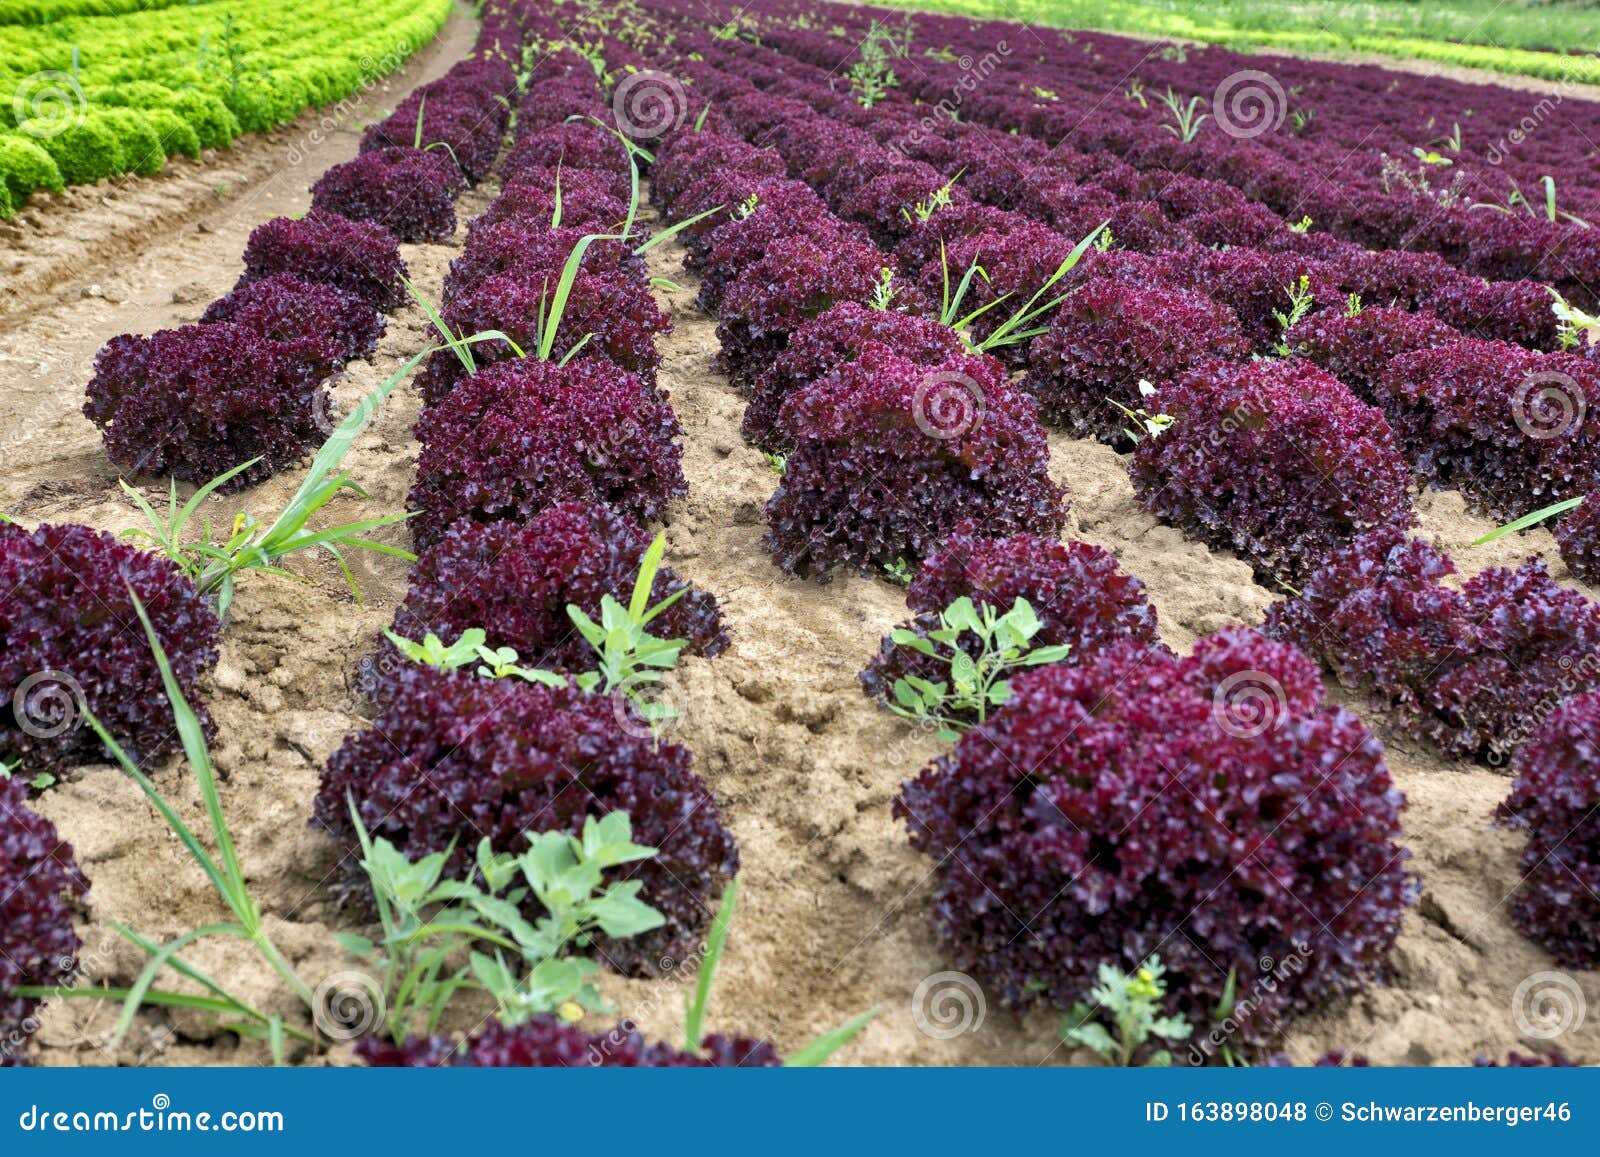 Lollo Bianco And Lollo Rosso Salad Field Stock Photo - Image of organic,  salad: 163898048